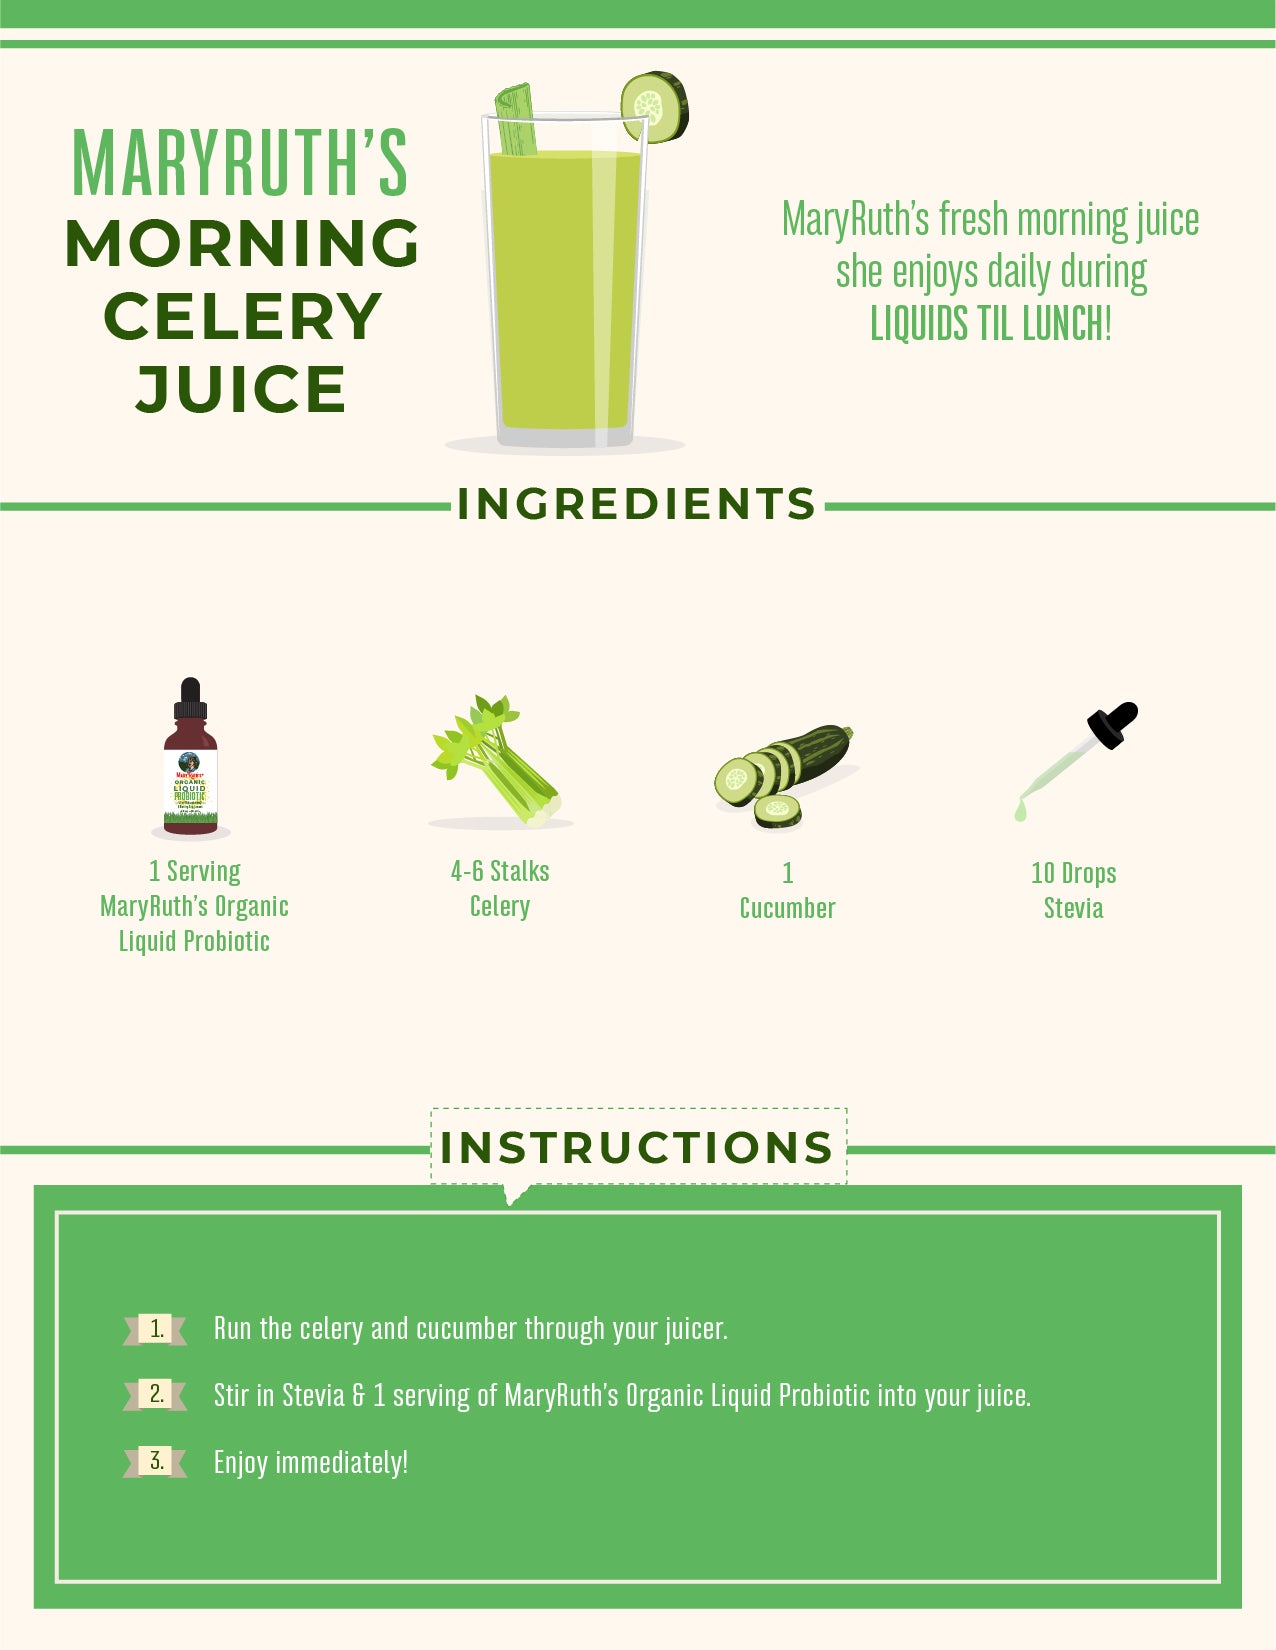 MaryRuth's Morning Celery Juice